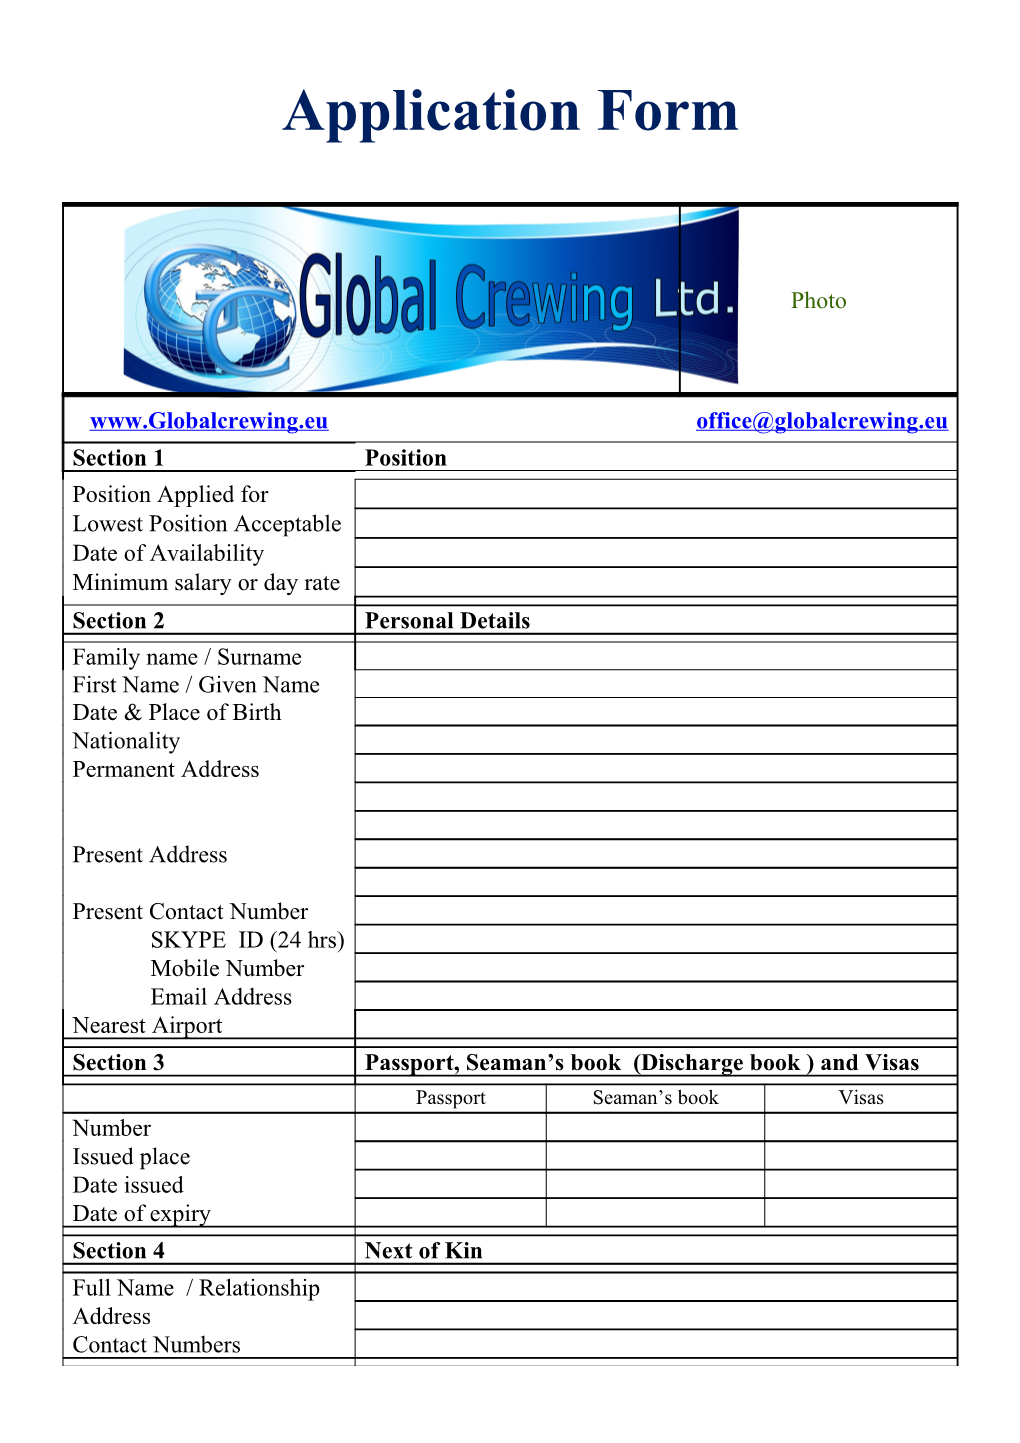 Global Crewing Ltd